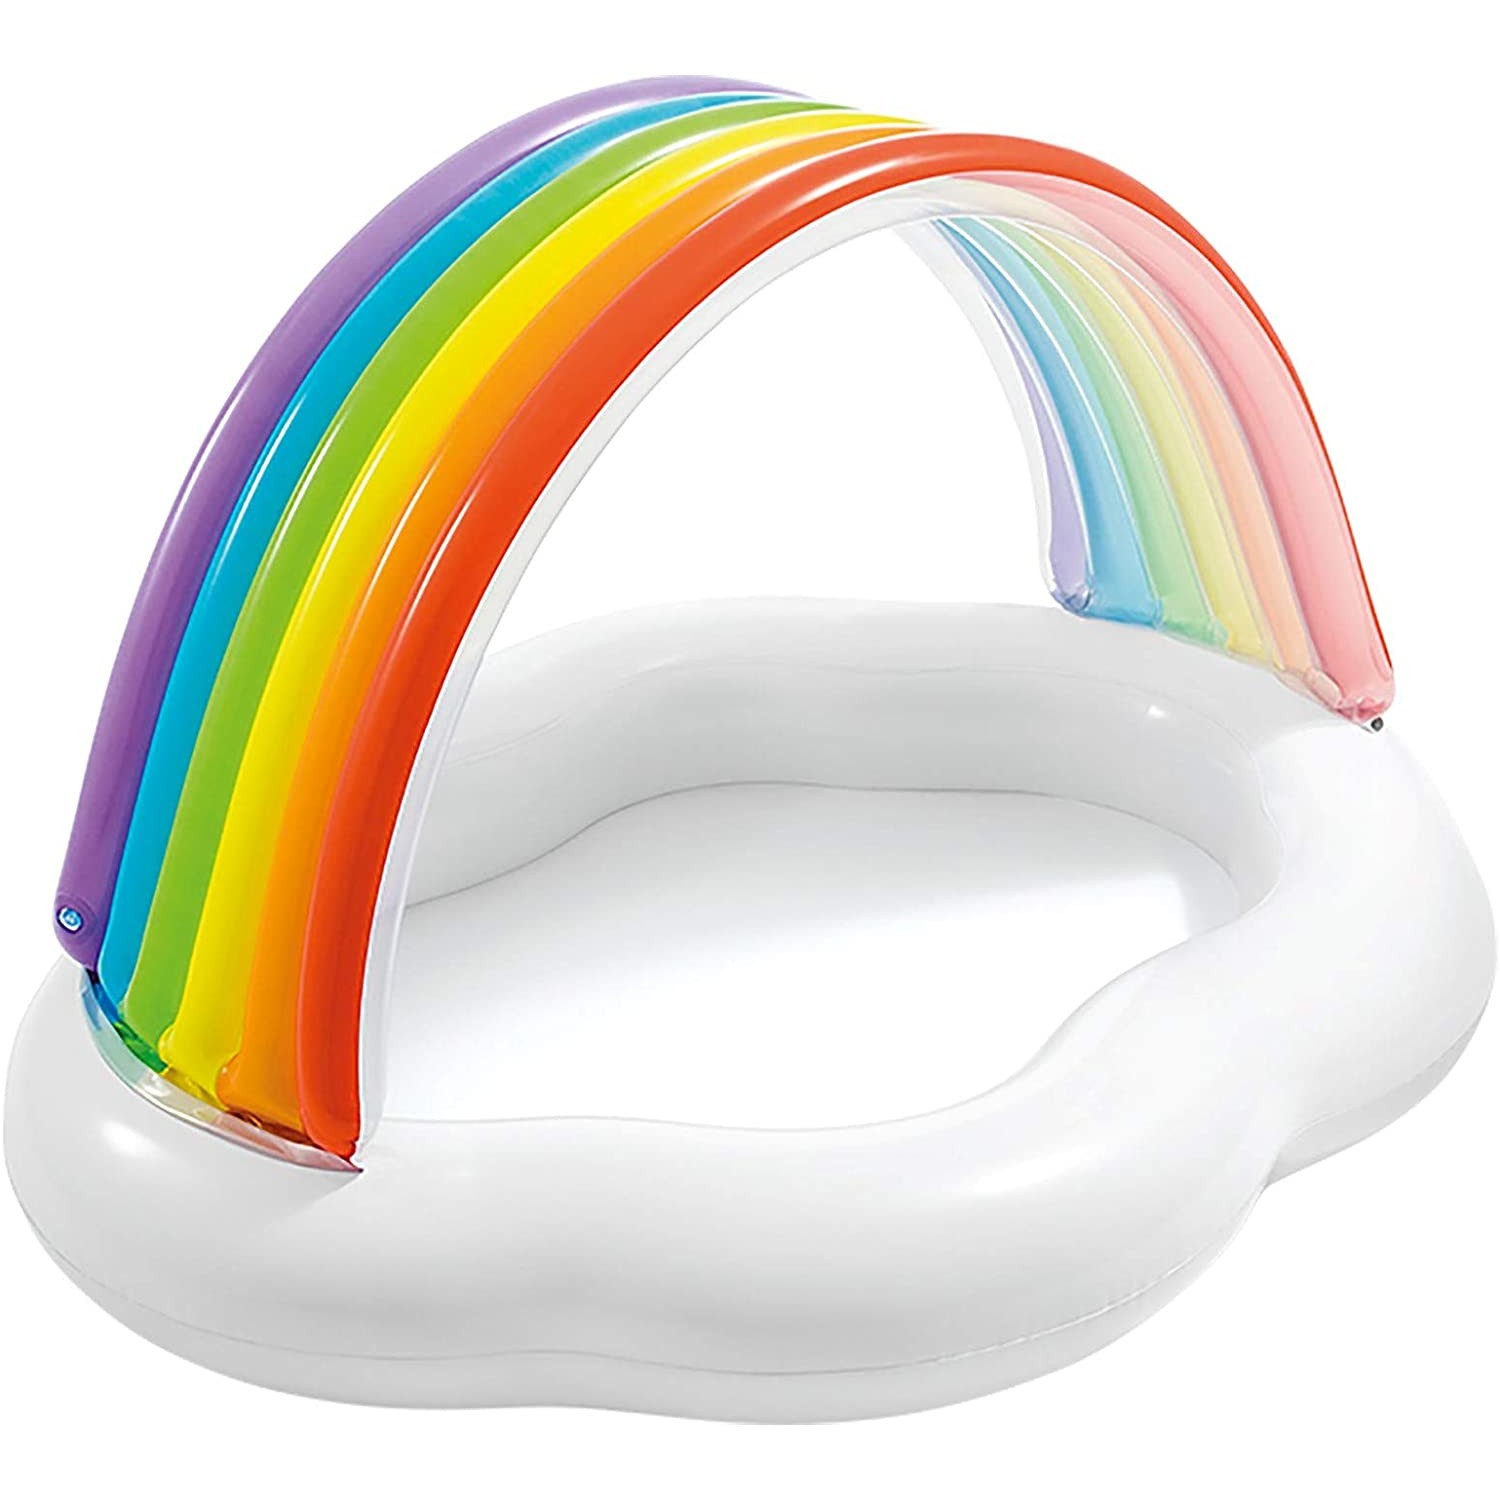 Planschbecken, mehrfarbig Baby Cloud (142x119x84cm) INTEX Pool Rainbow -